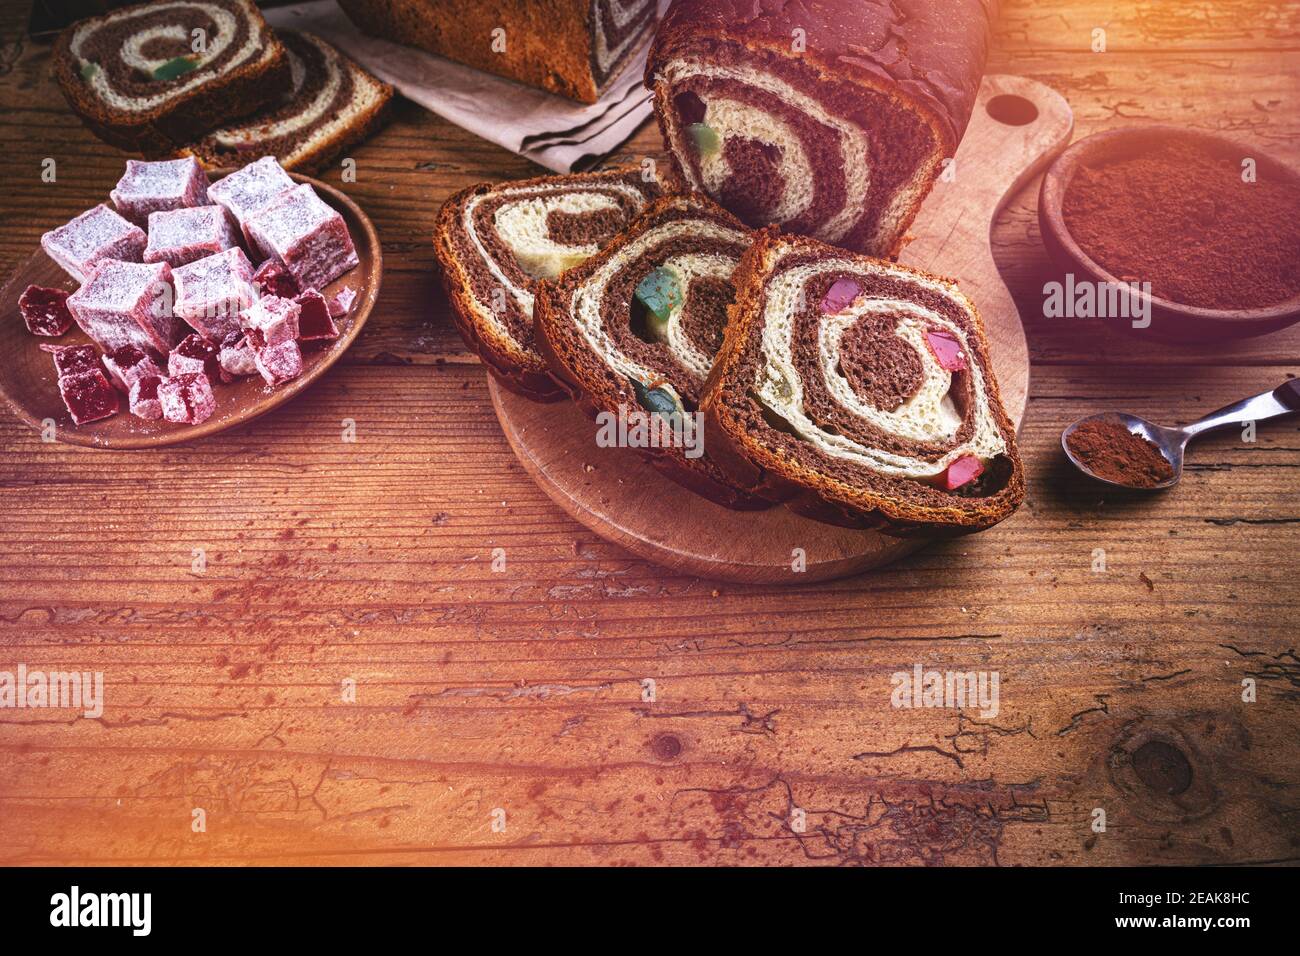 Homemade sweet dessert pastry Stock Photo